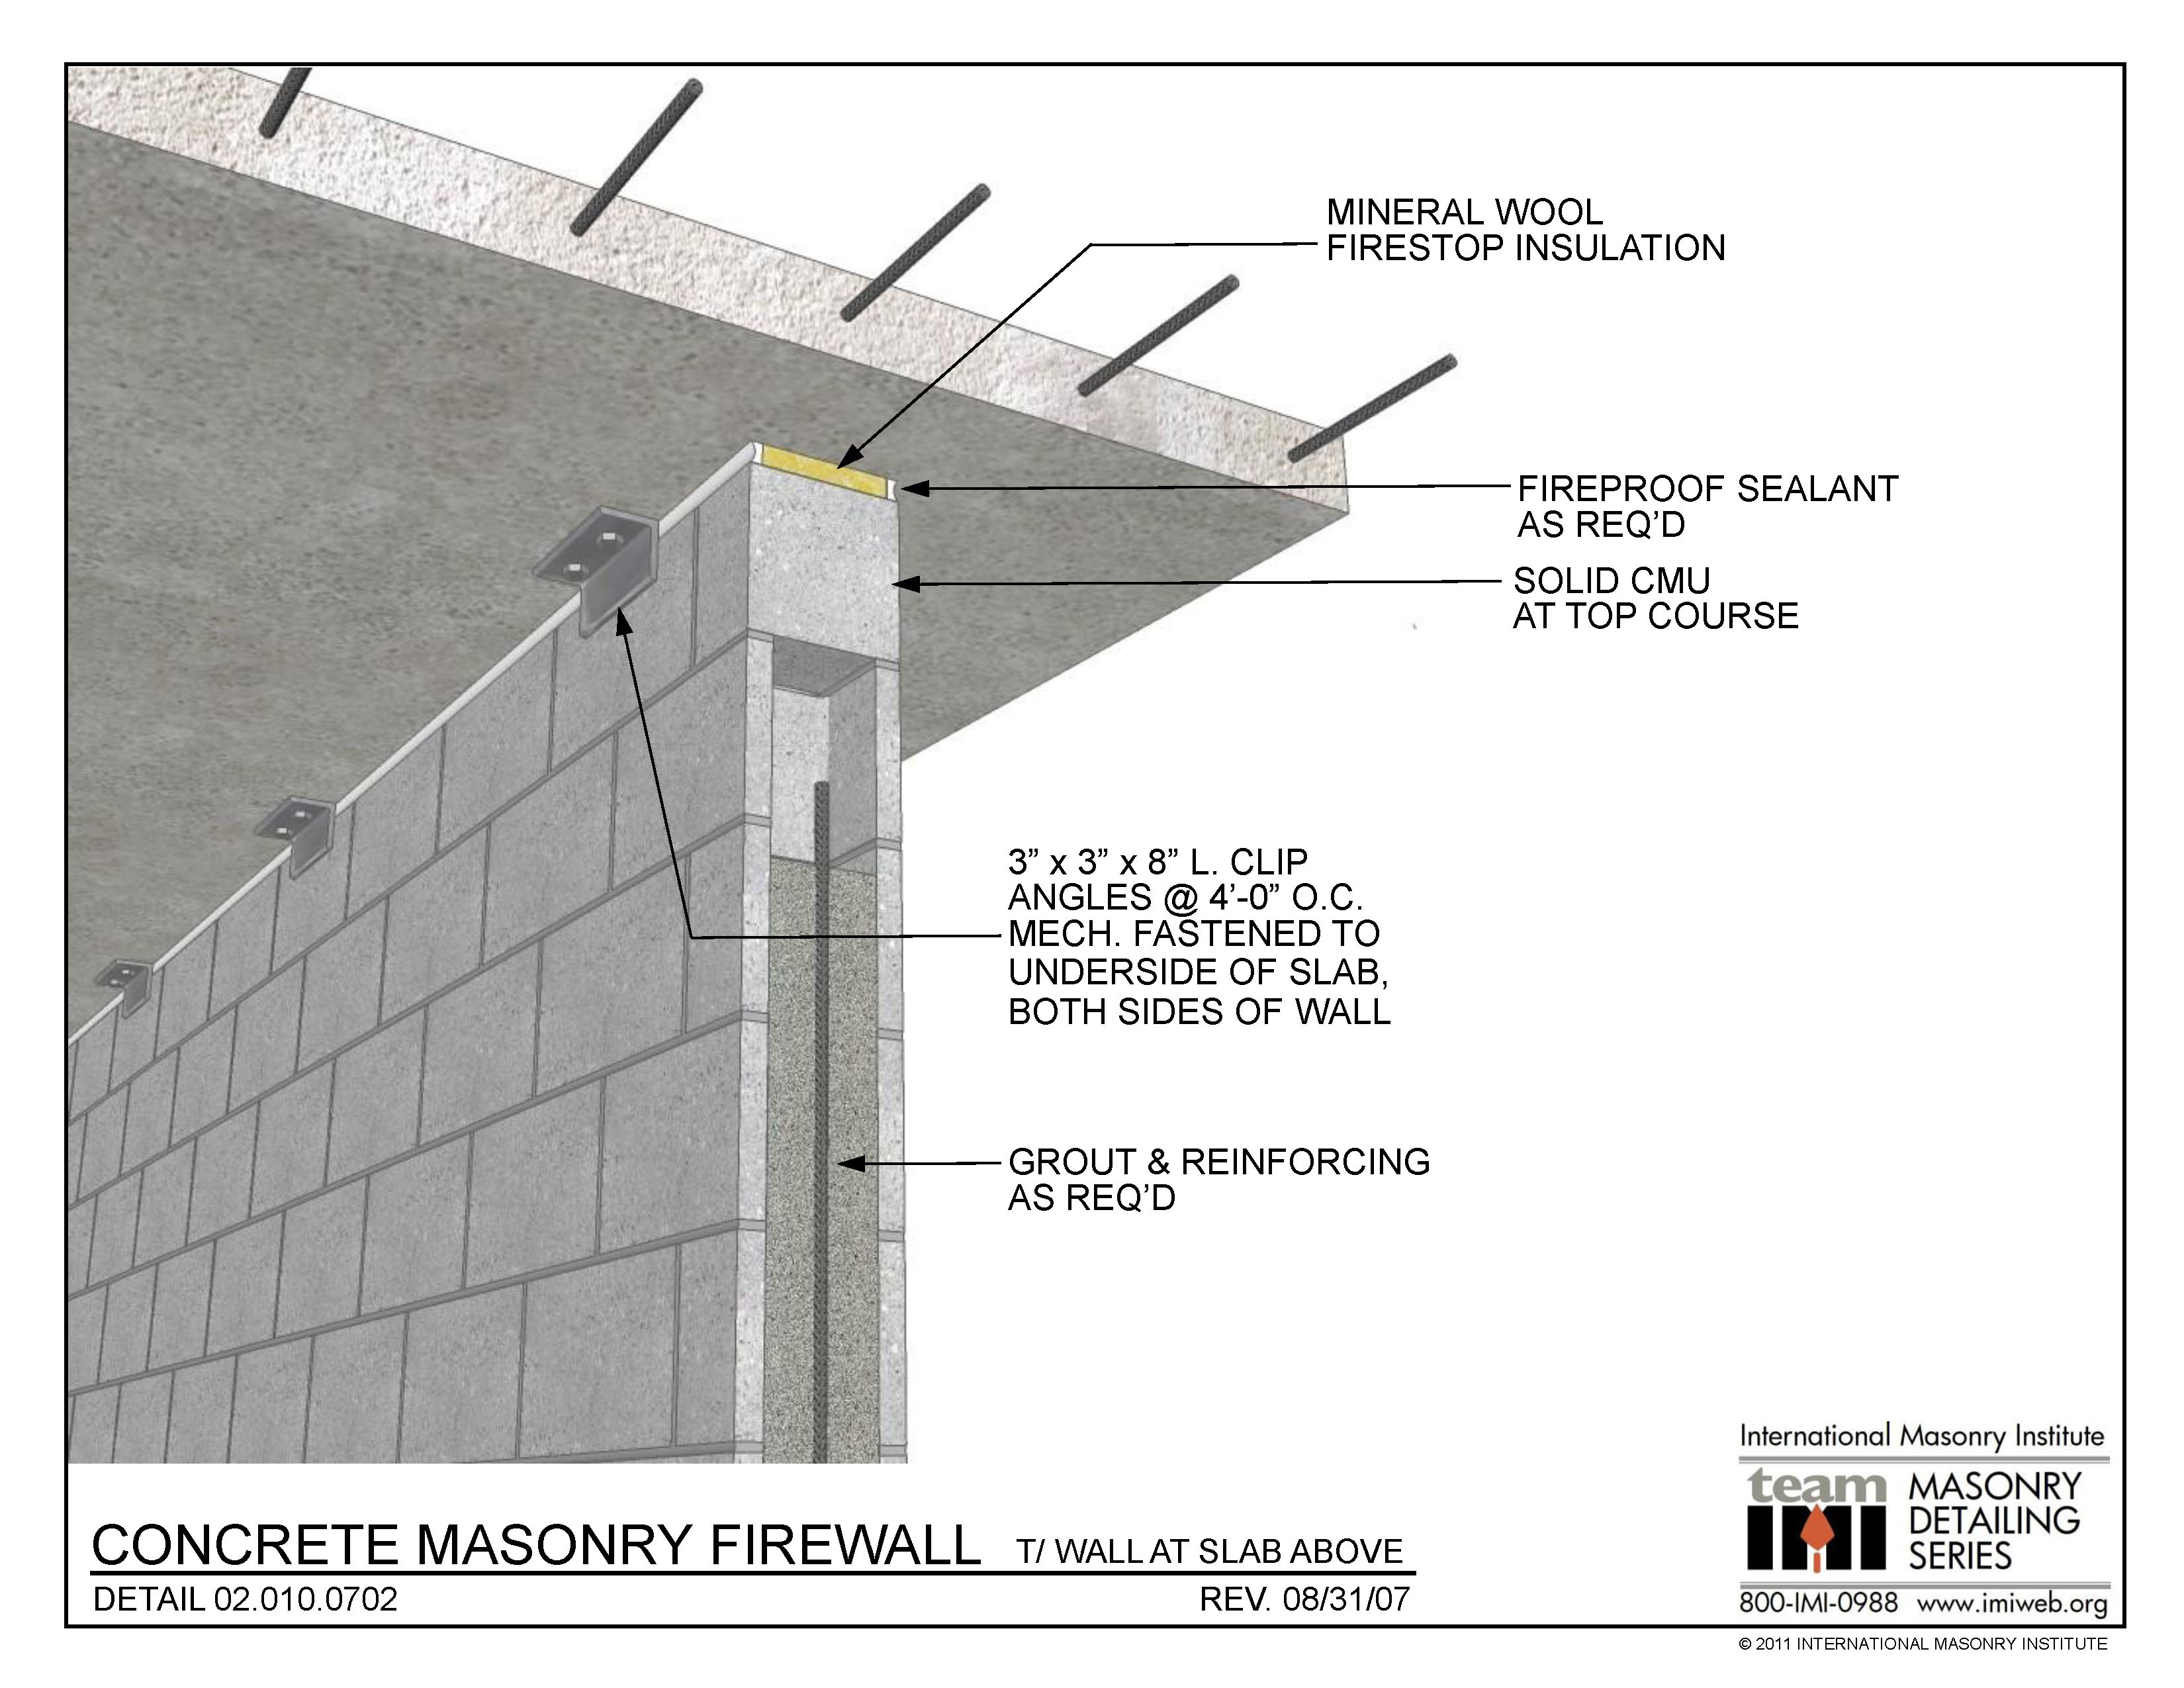 02.010.0702: Concrete Masonry Firewall - T/ Wall at Slab Above